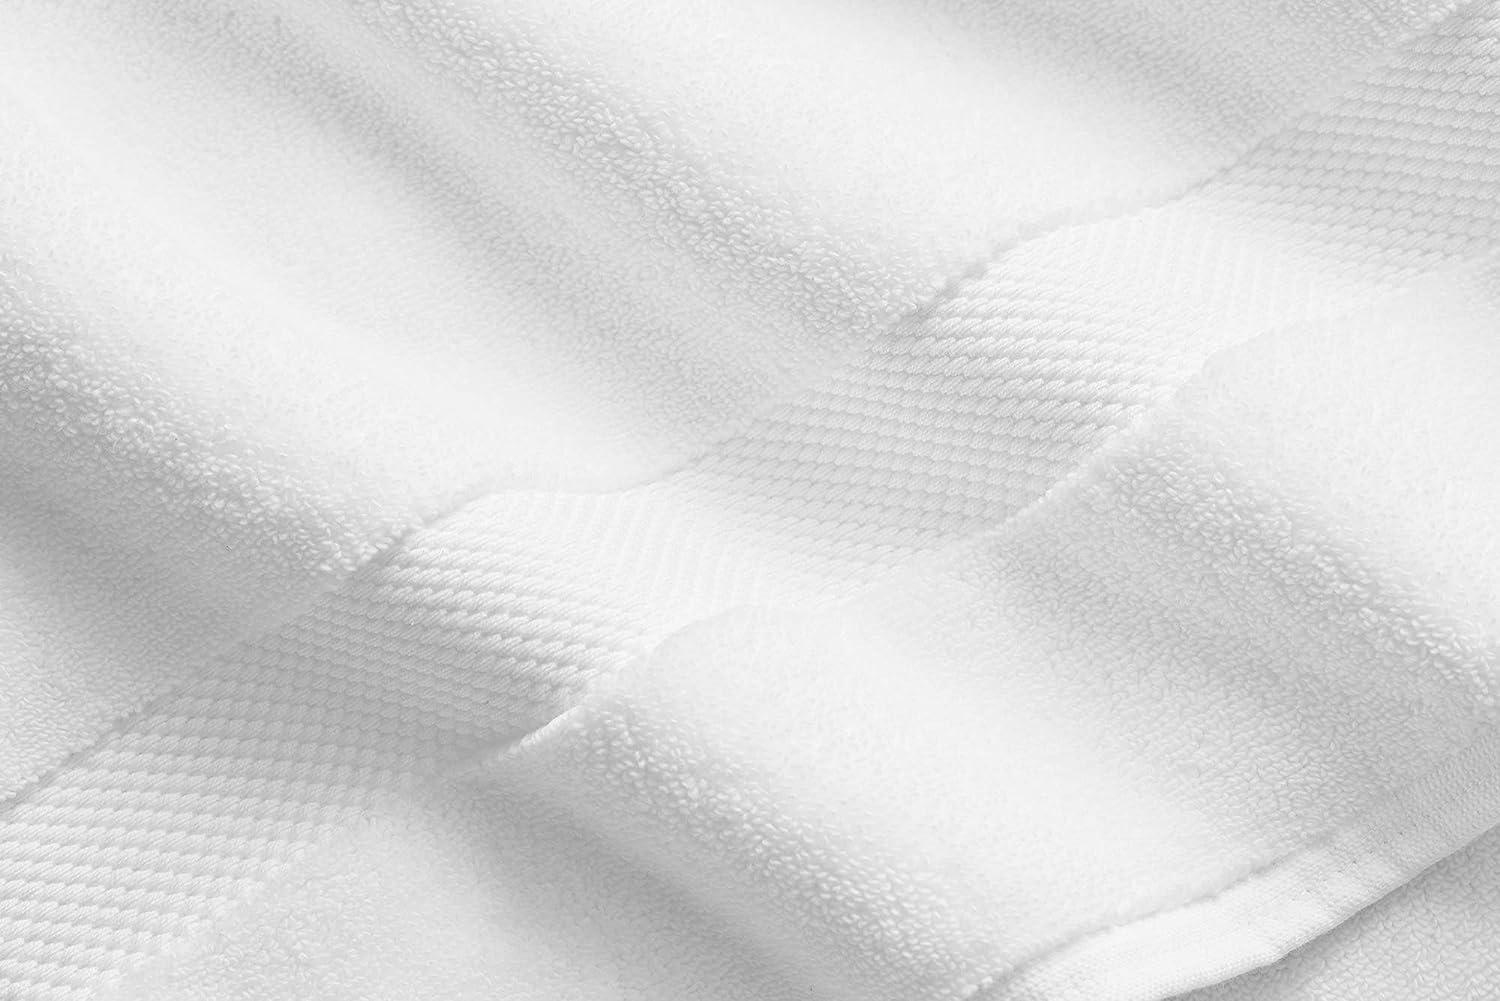 Supima Cotton 3 Piece Bath Towel Set by Laguna Beach Textile Co - Bath Towel, Hand Towel, Washcloth - Hotel Quality, Plush, 730 GSM Cloud Gray